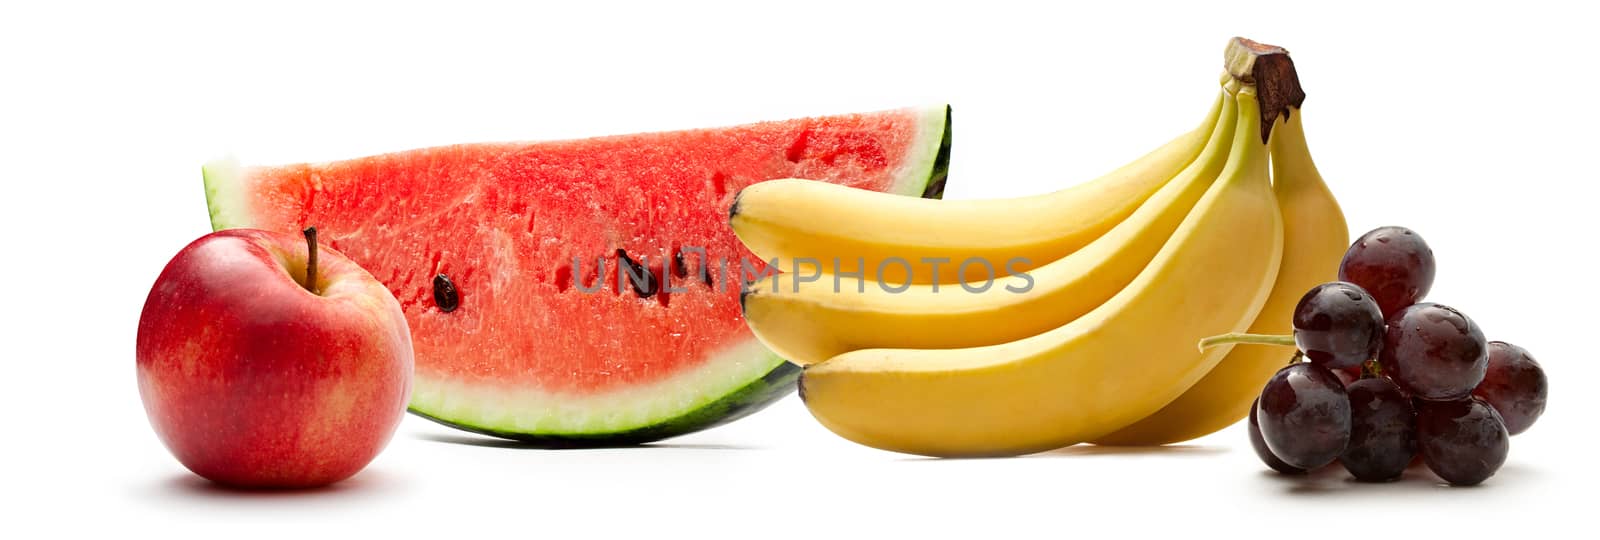 Watermelon, bananas. apple and grapes